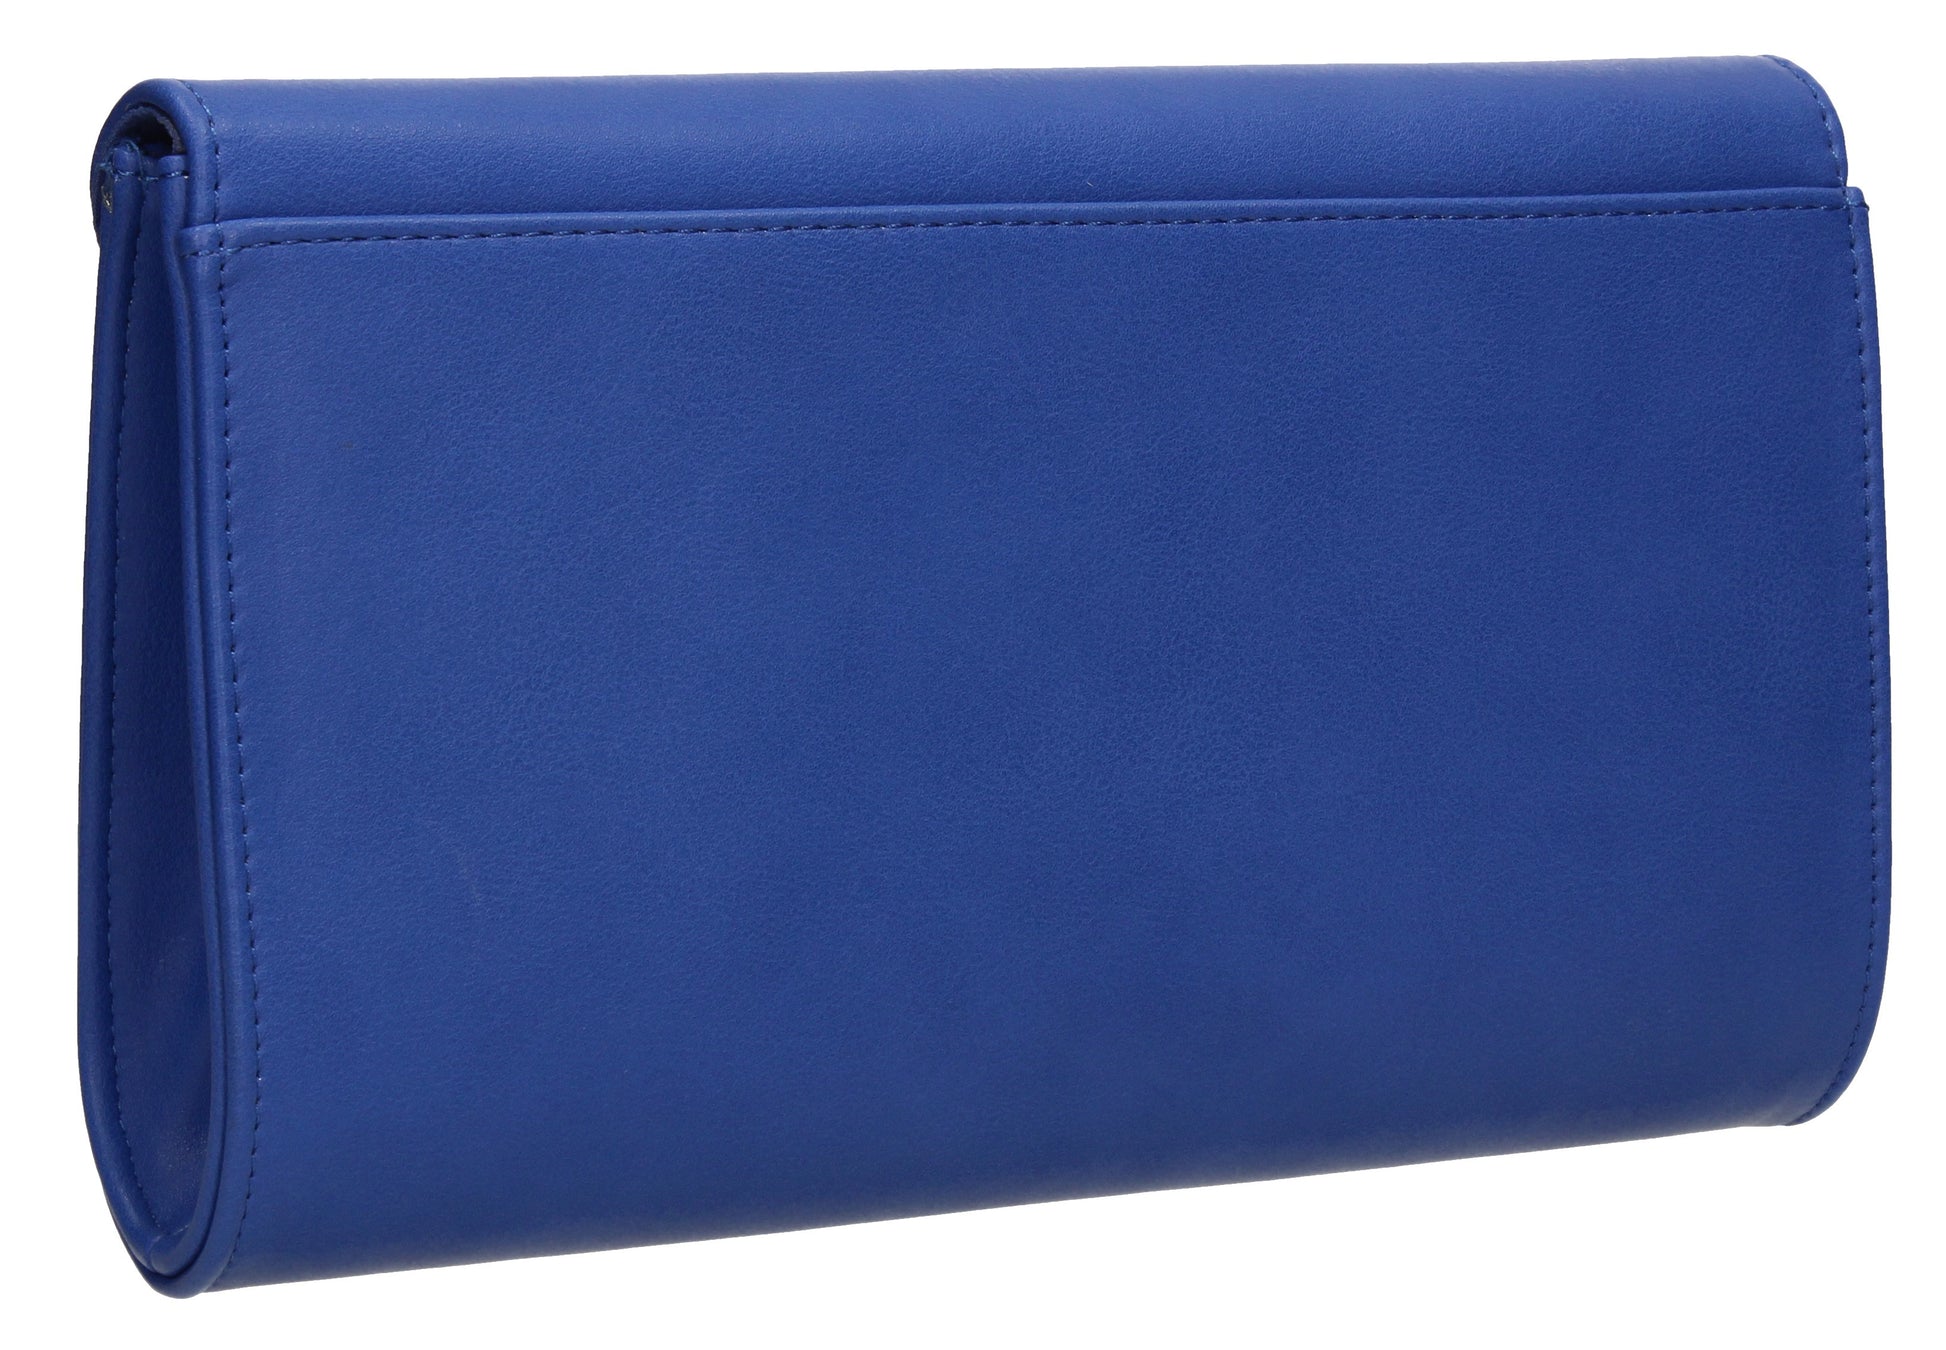 SWANKYSWANS Seraphina Clutch Bag Royal Blue Cute Cheap Clutch Bag For Weddings School and Work